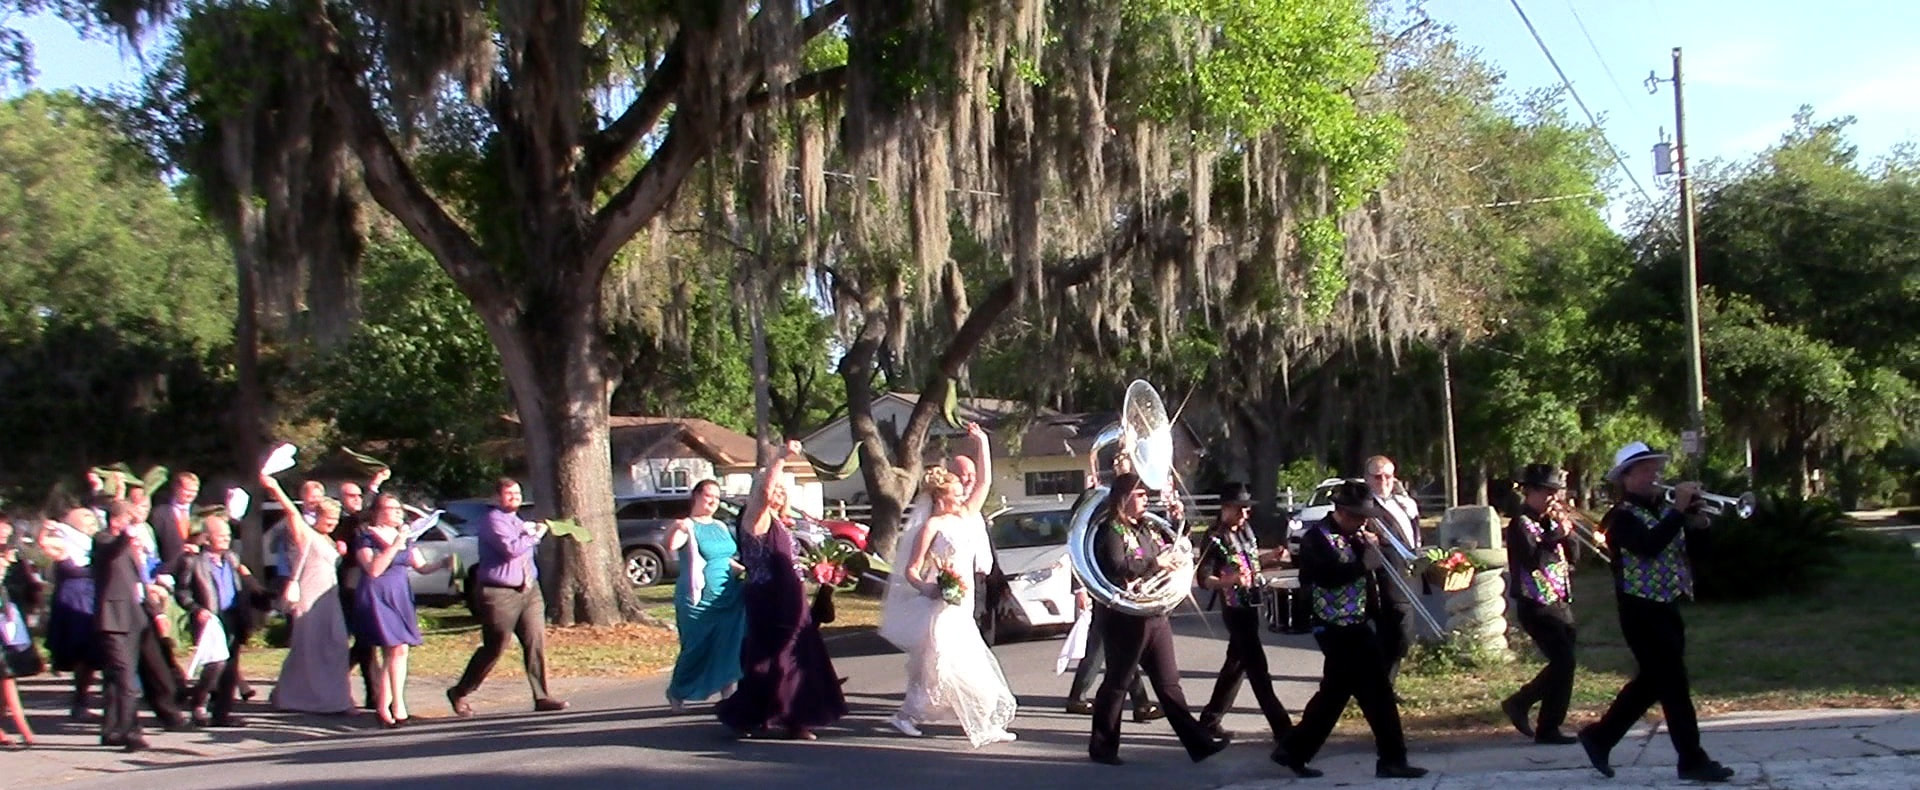 The Real Deal Brass Band, second line wedding parade, brass band, Vero Beach, Daytona Beach, Cocoa Beach, Fl.